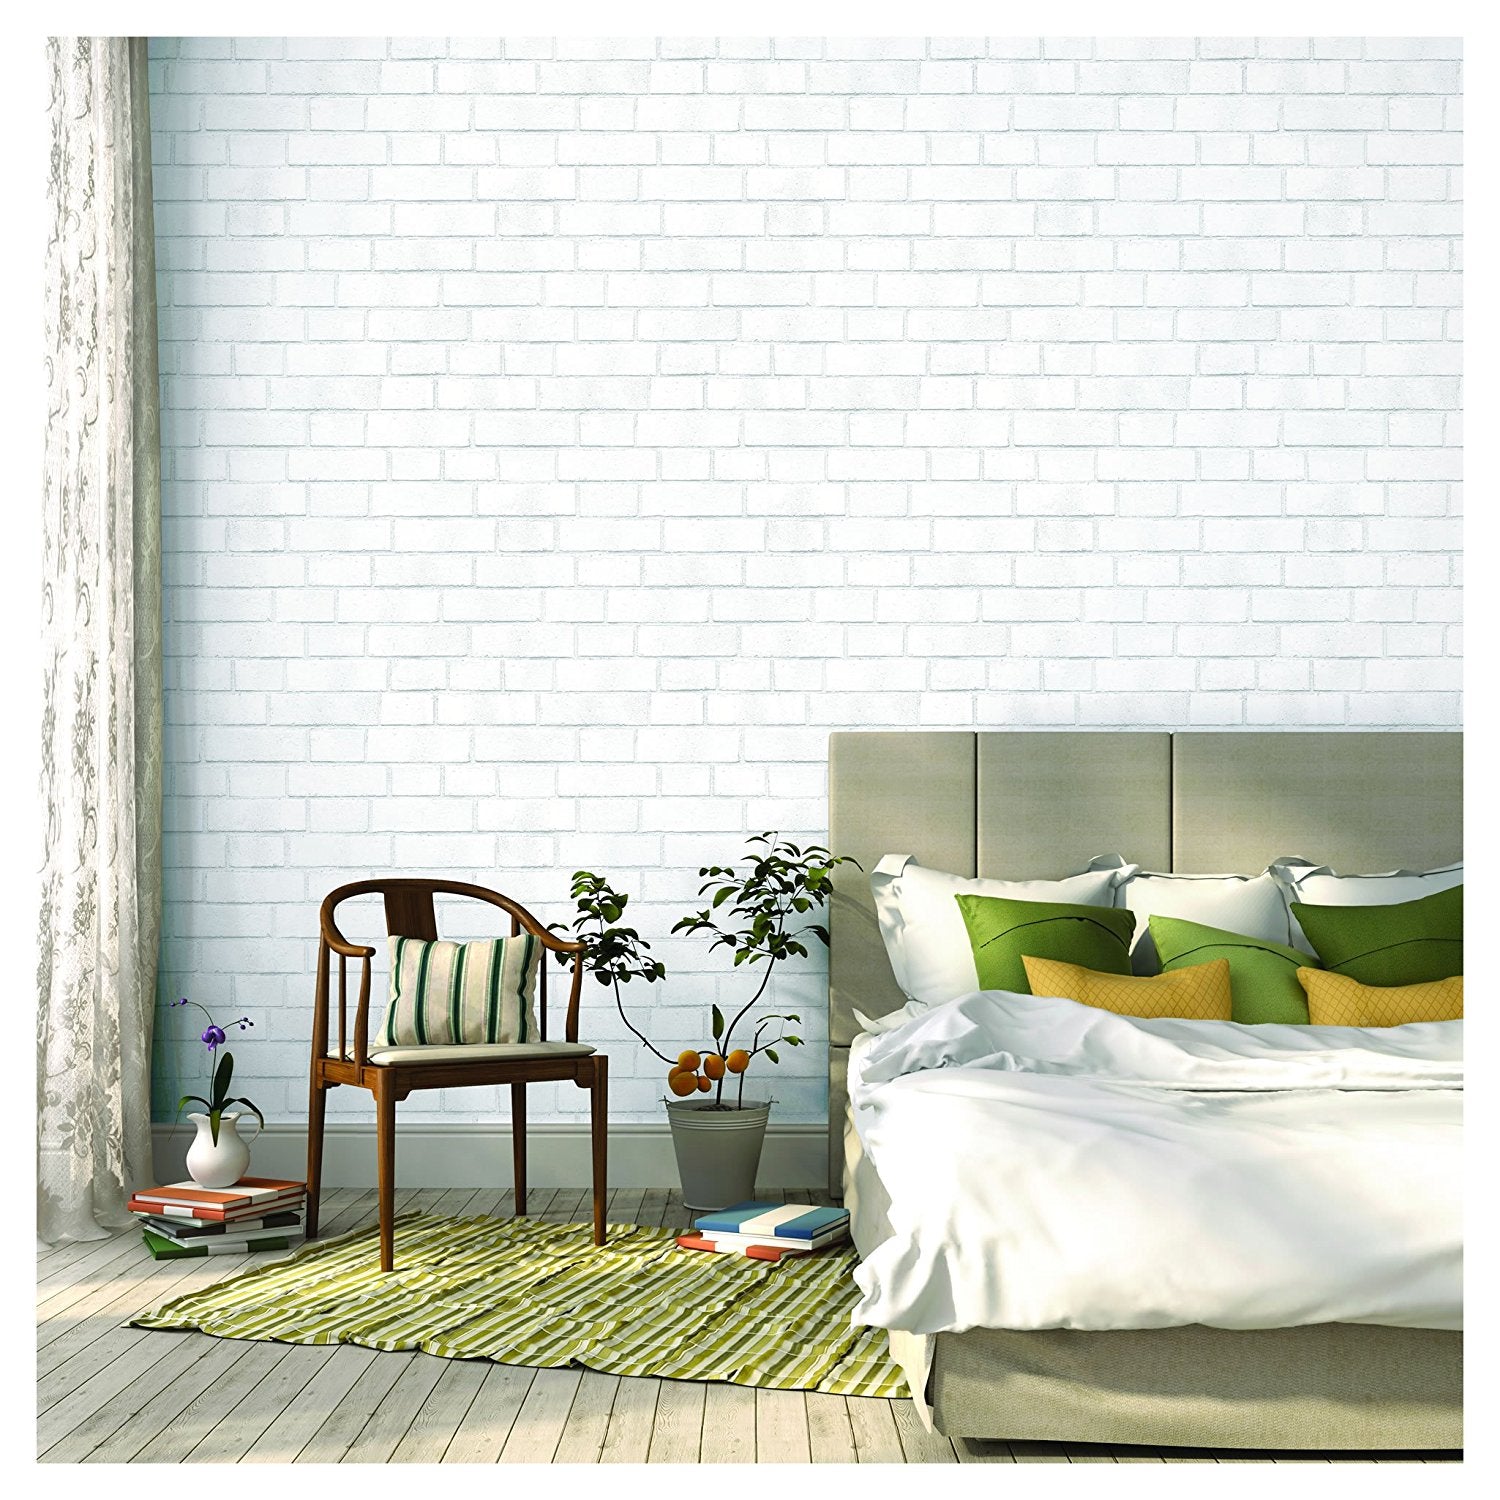 Tempaper BR096 Textured Brick Self-Adhesive Wallpaper; White